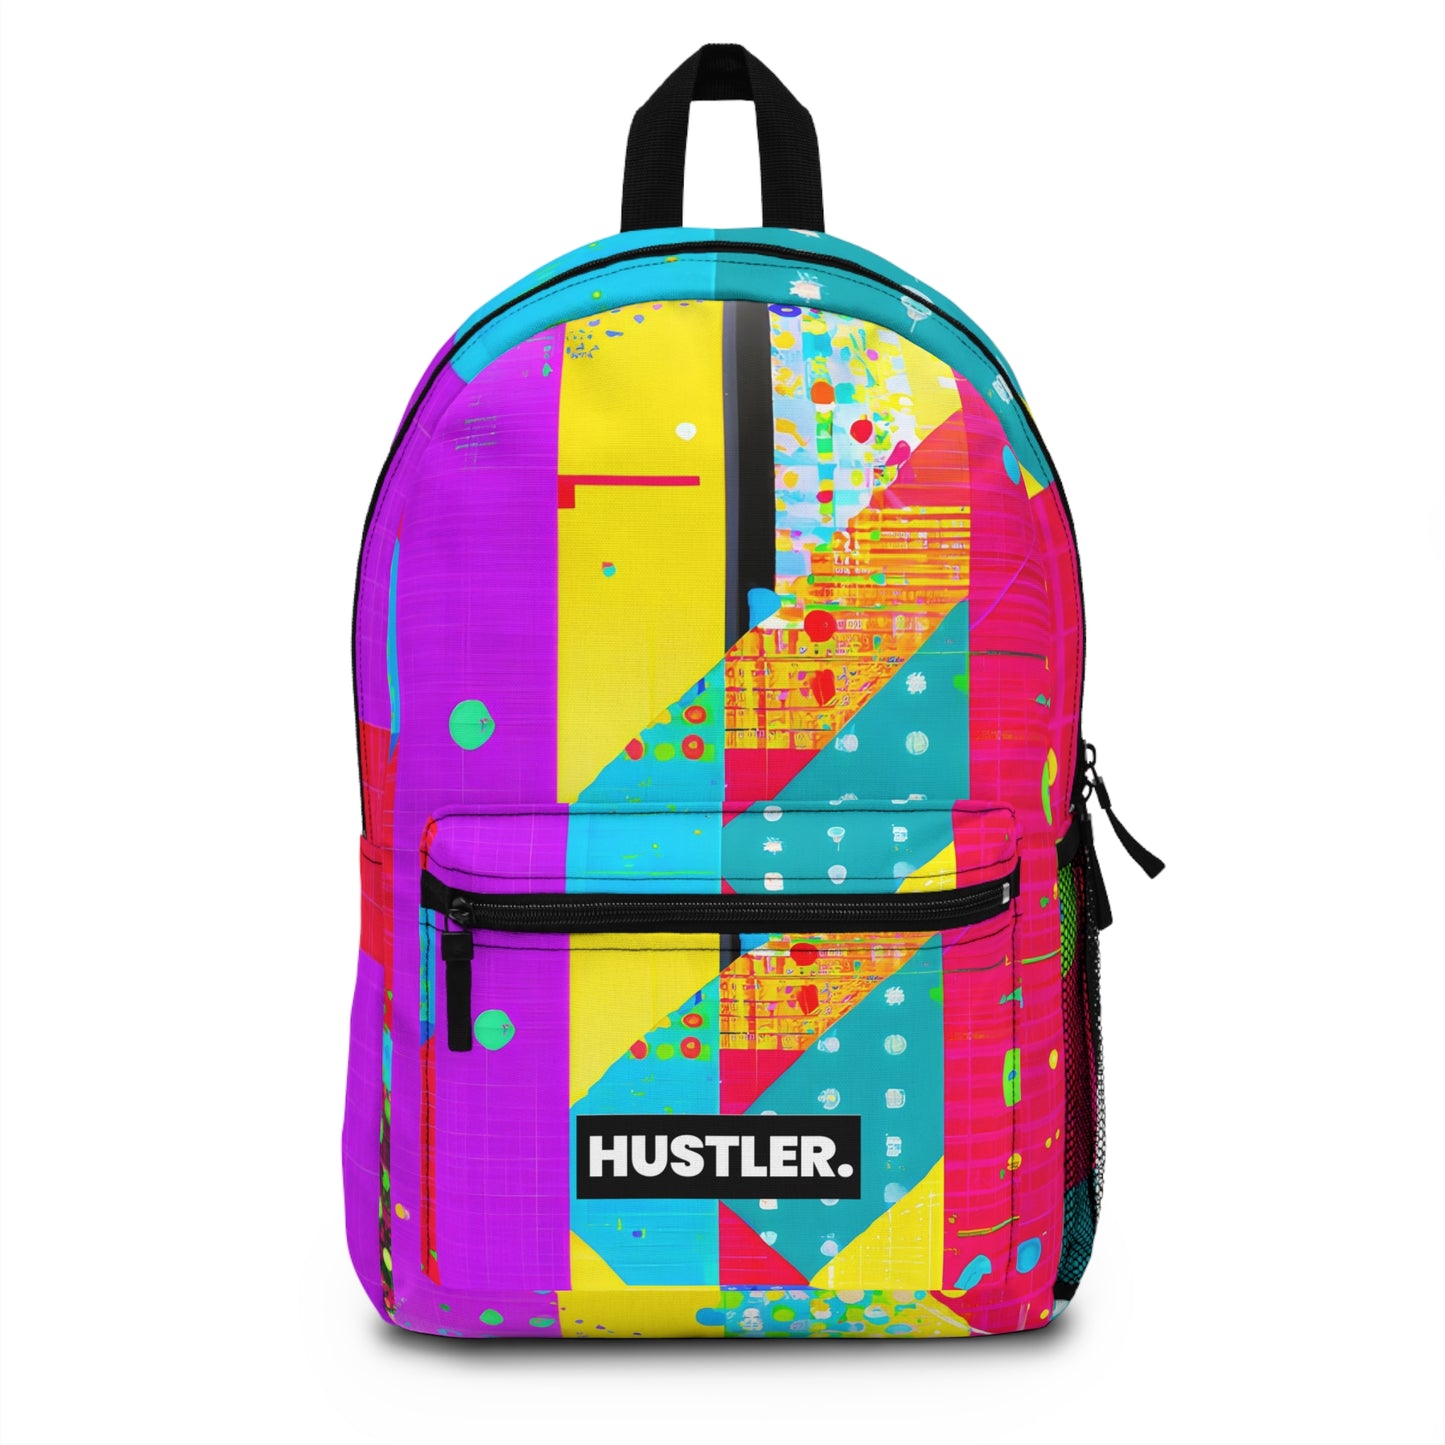 Star Fletcher - Hustler Backpack